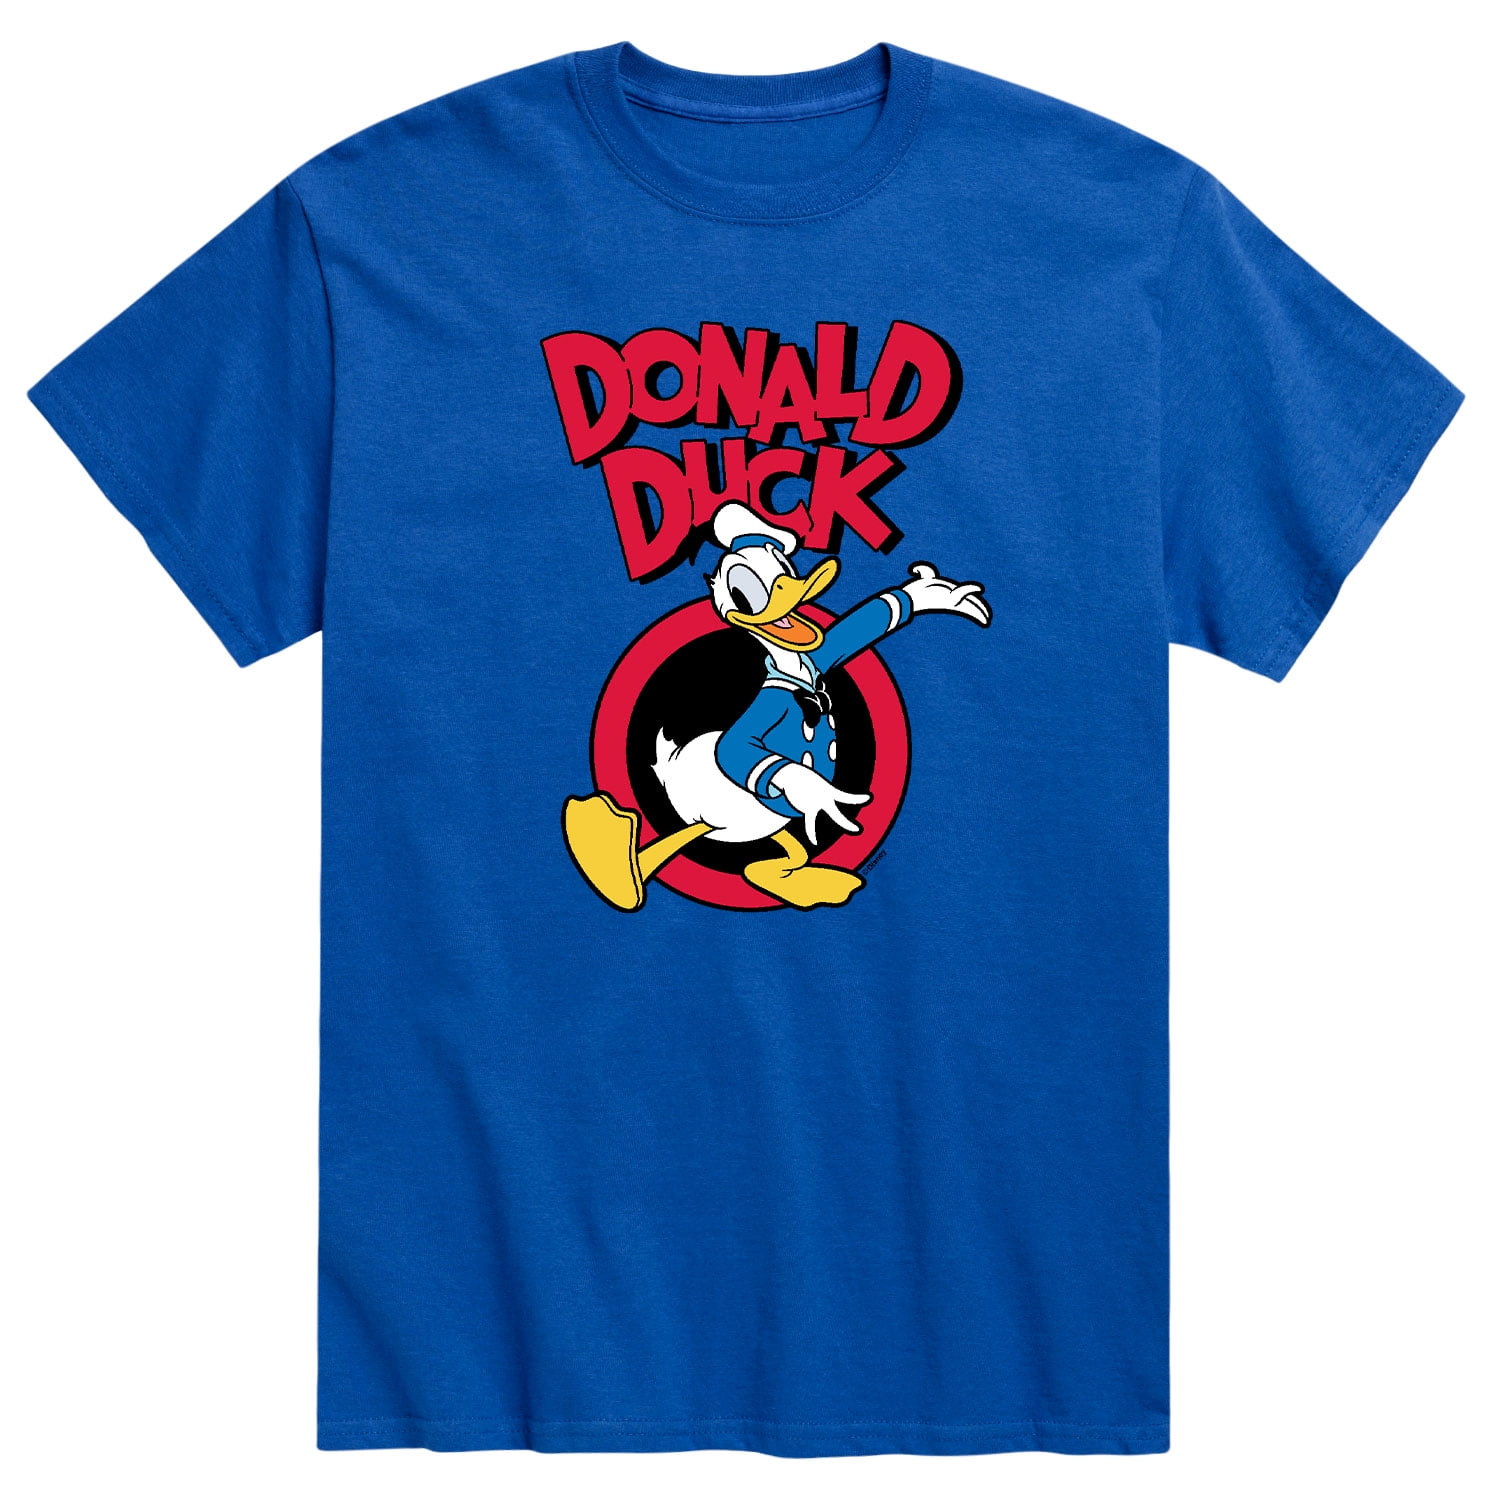 Disney - Donald Duck - Men's Short Sleeve Graphic T-Shirt